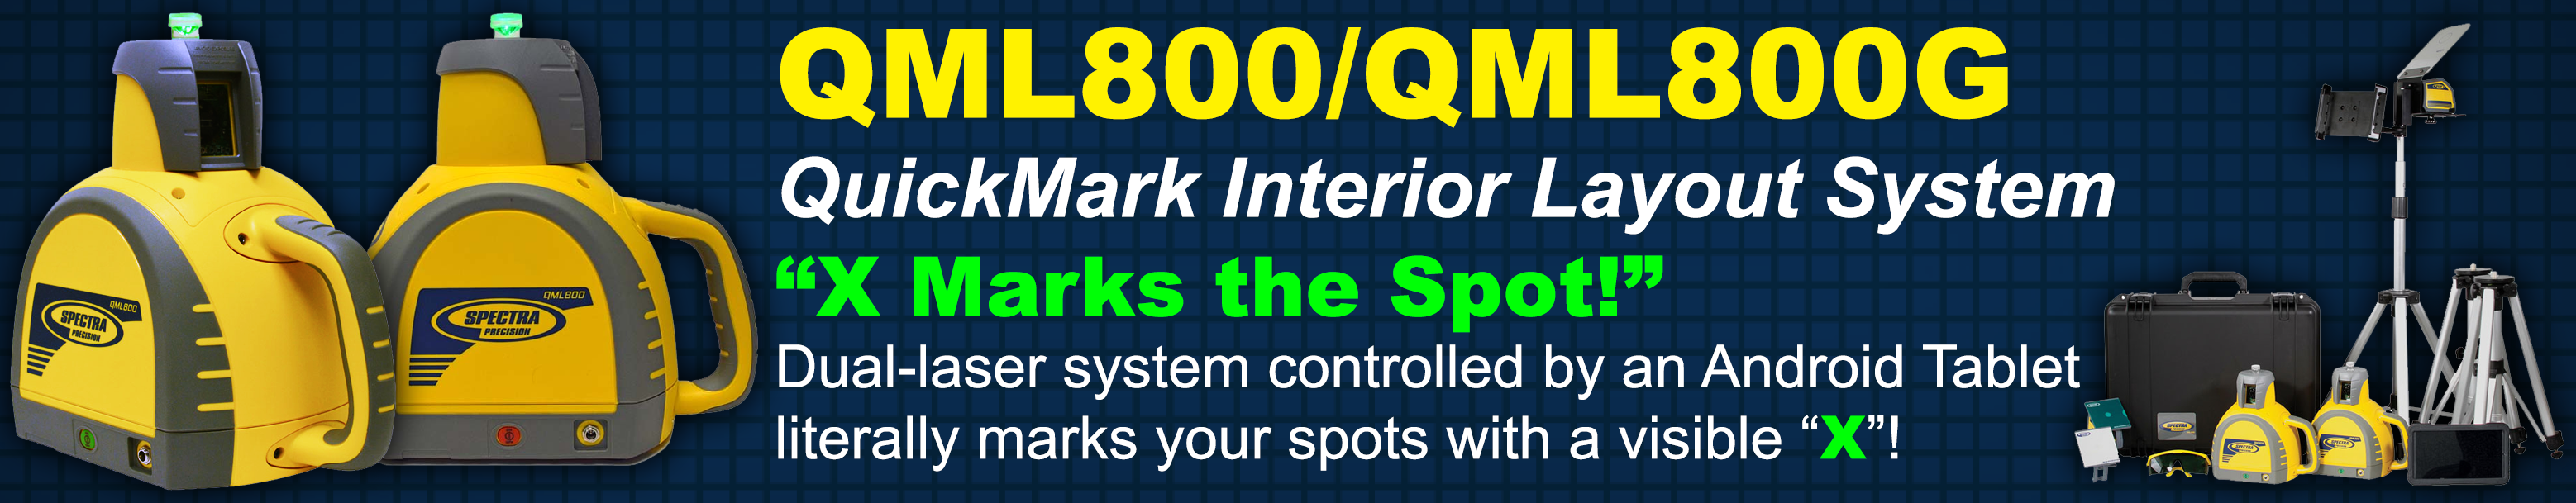 qml800-qml800g-quickmark-interior-layout-system.png